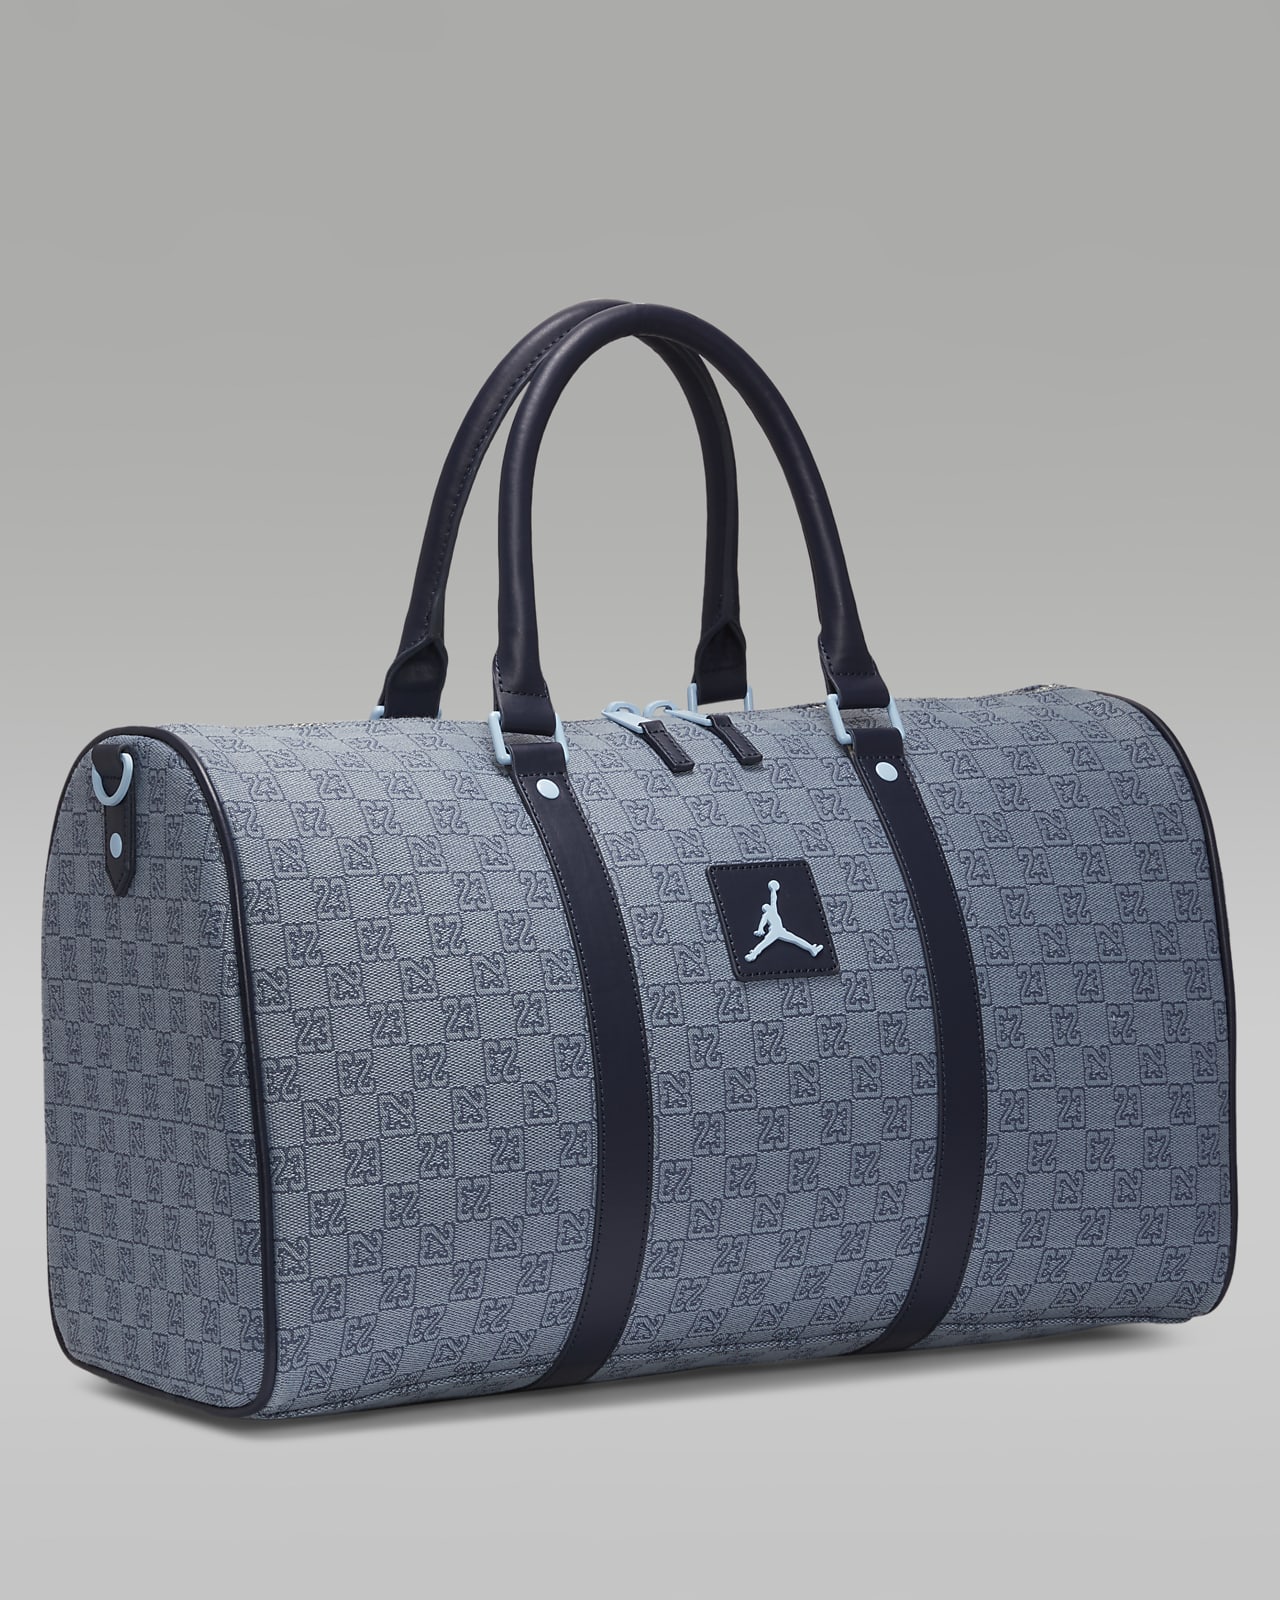 Louis Vuitton Handbag Monogram Duffel Bags PNG, Clipart